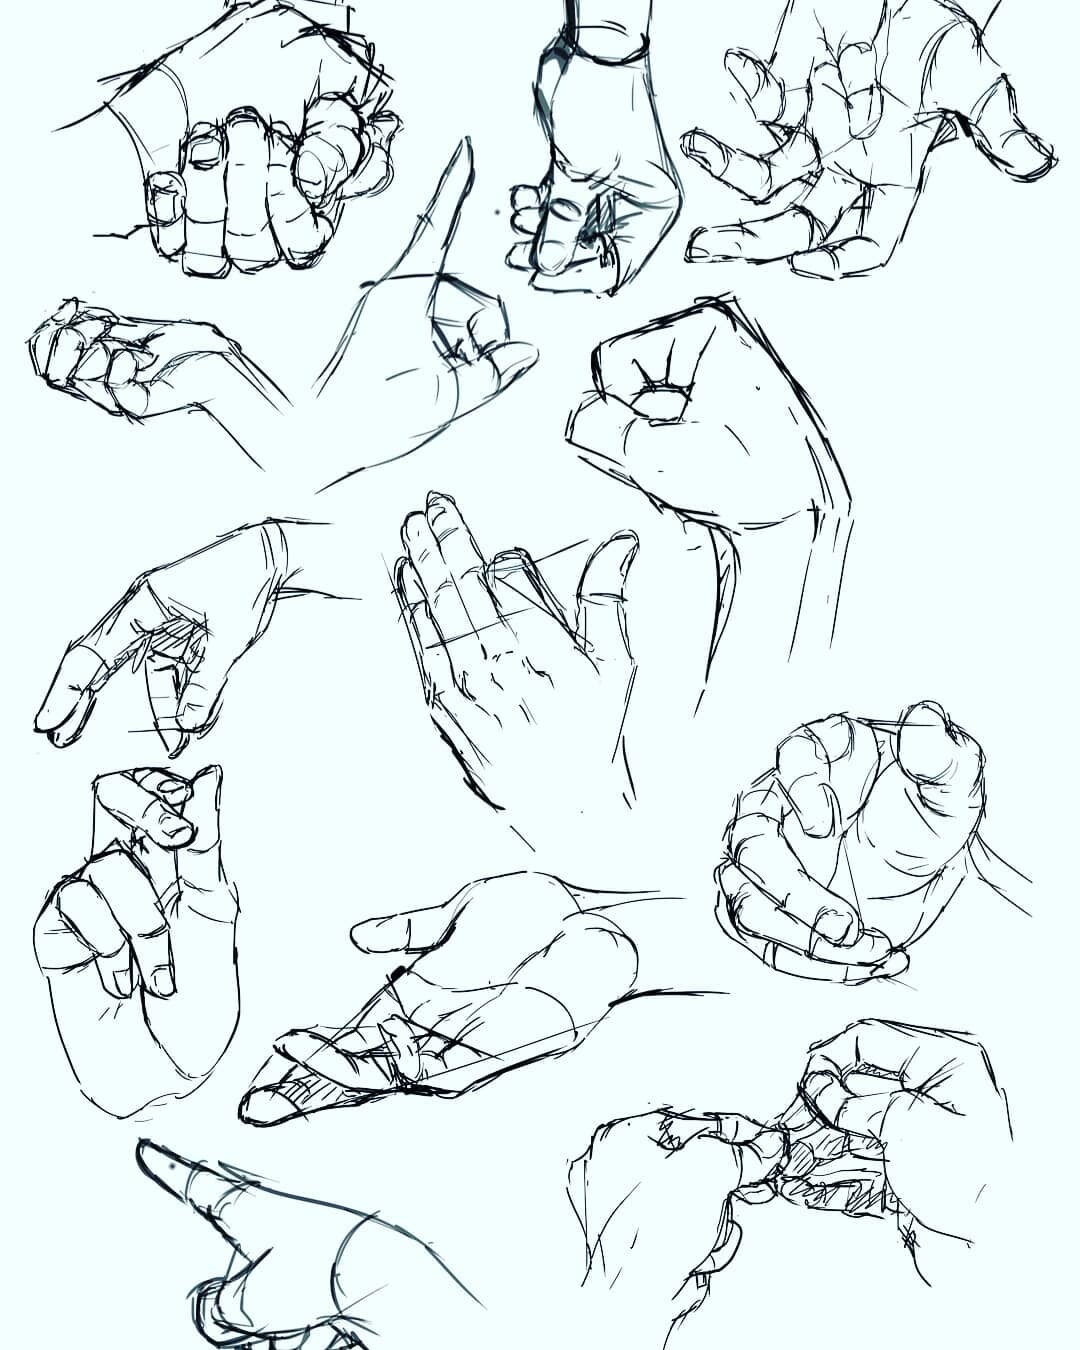 ArtStation - Hand Gesture Sketches